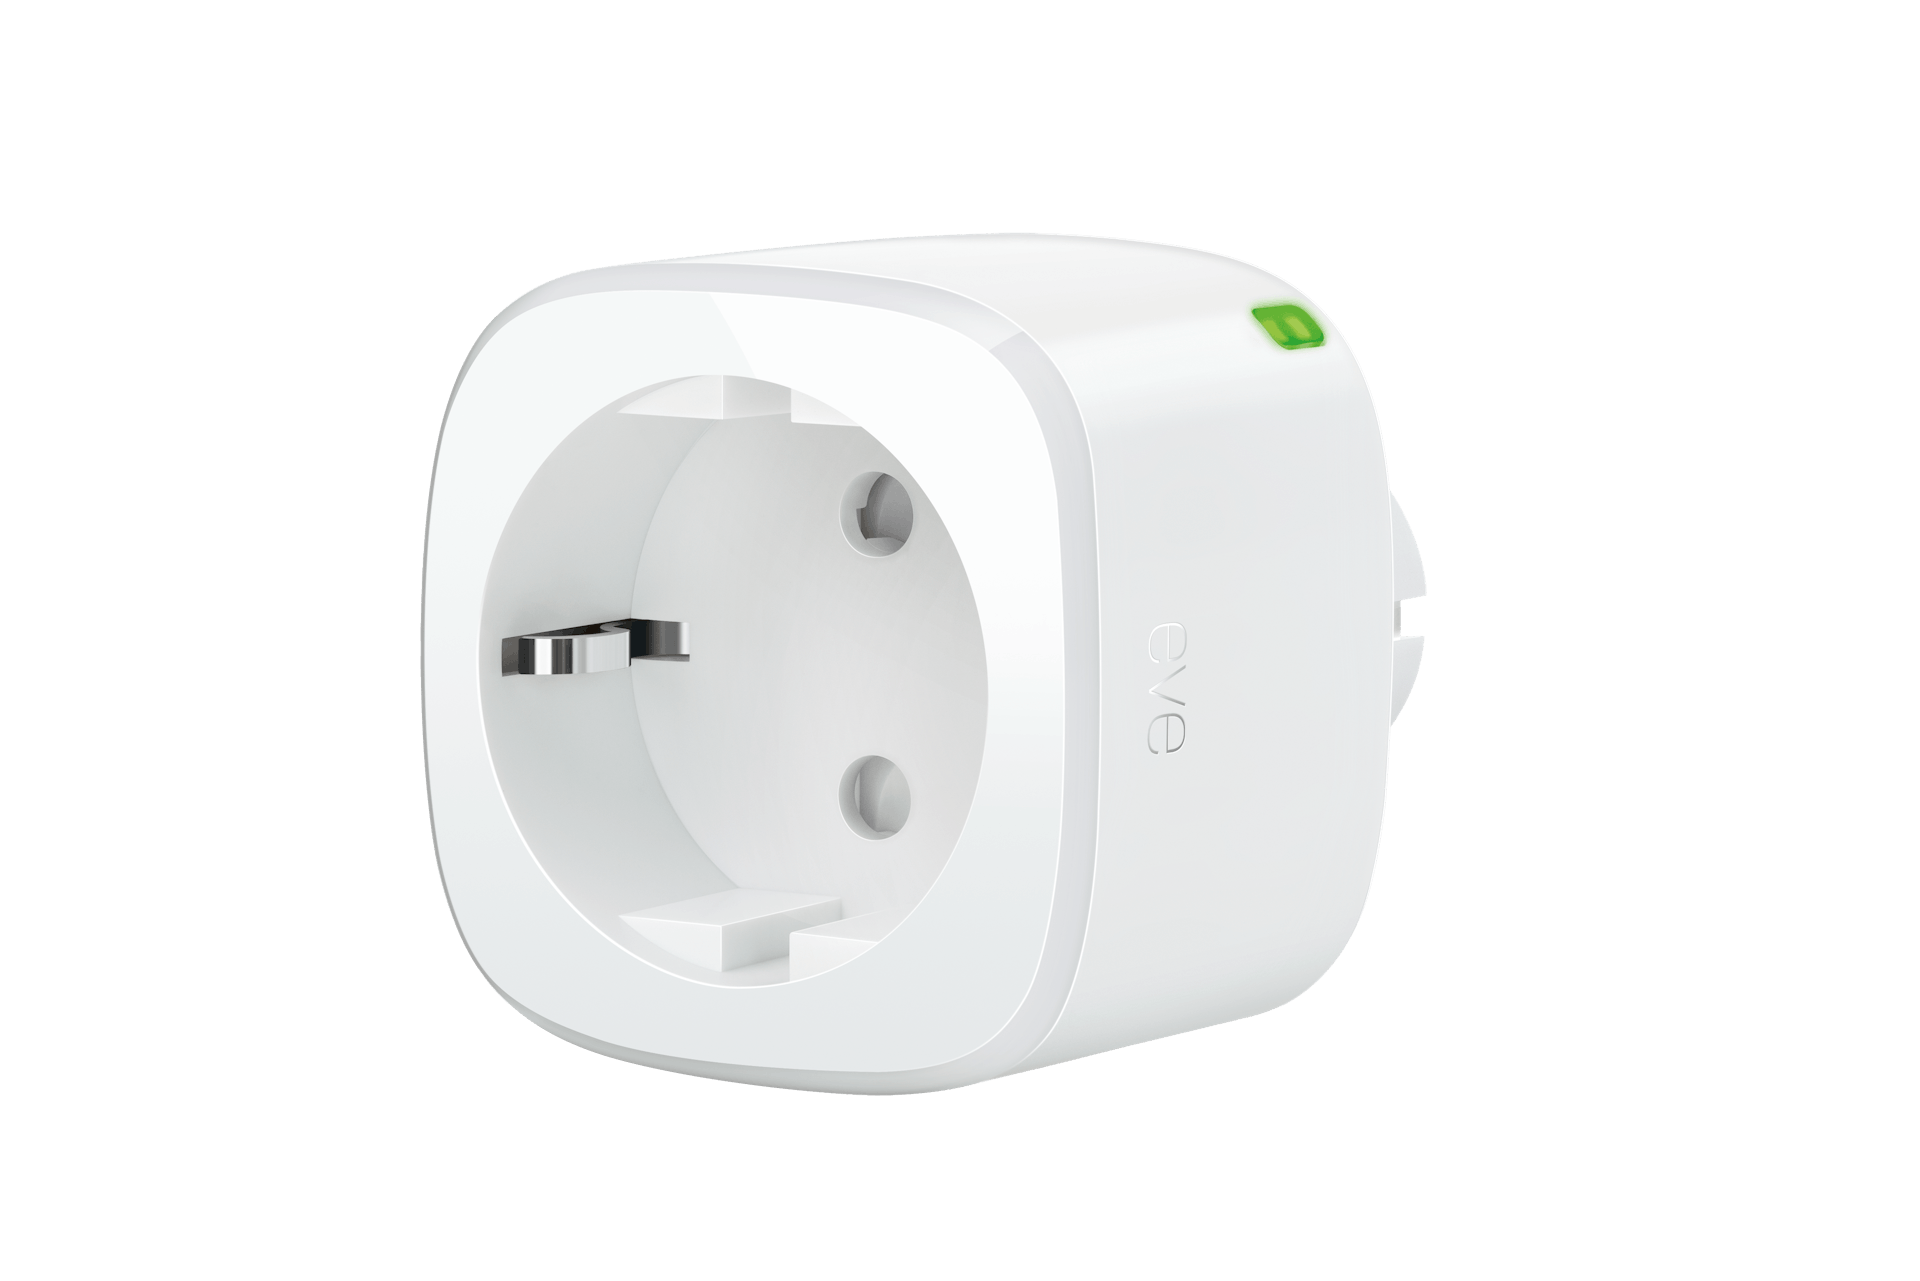 Eve Energy – Smart plug